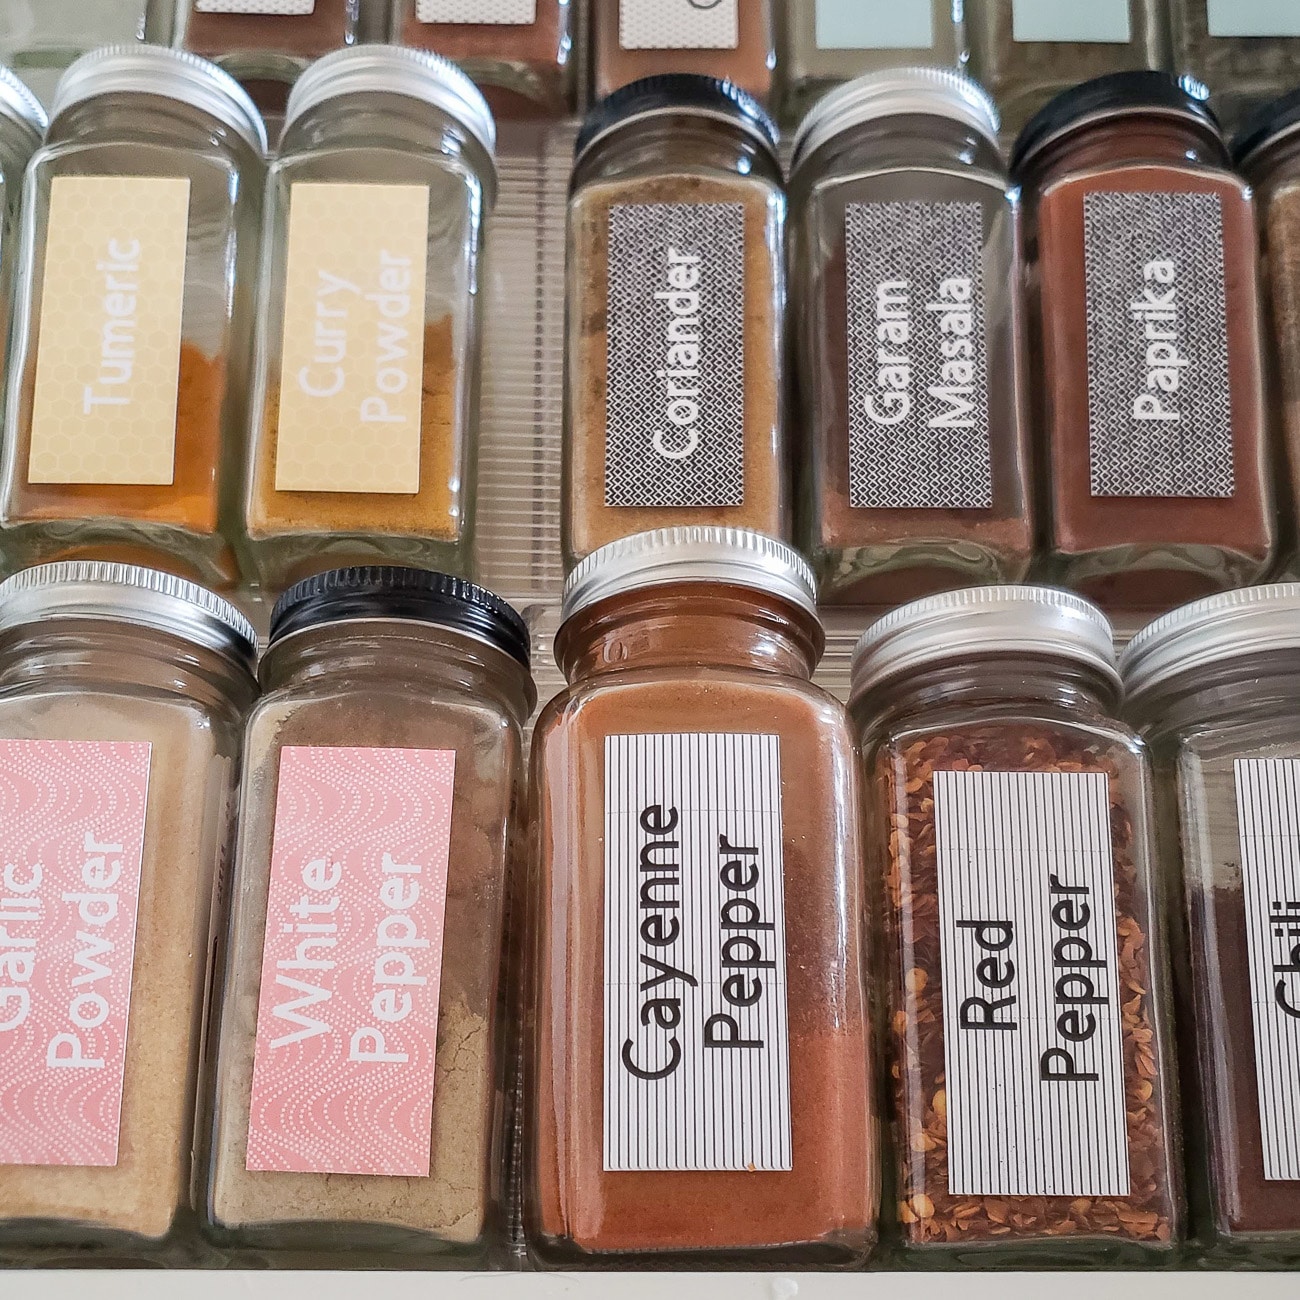 https://www.polishedhabitat.com/wp-content/uploads/2019/03/How-to-Organize-Spices-9.jpg